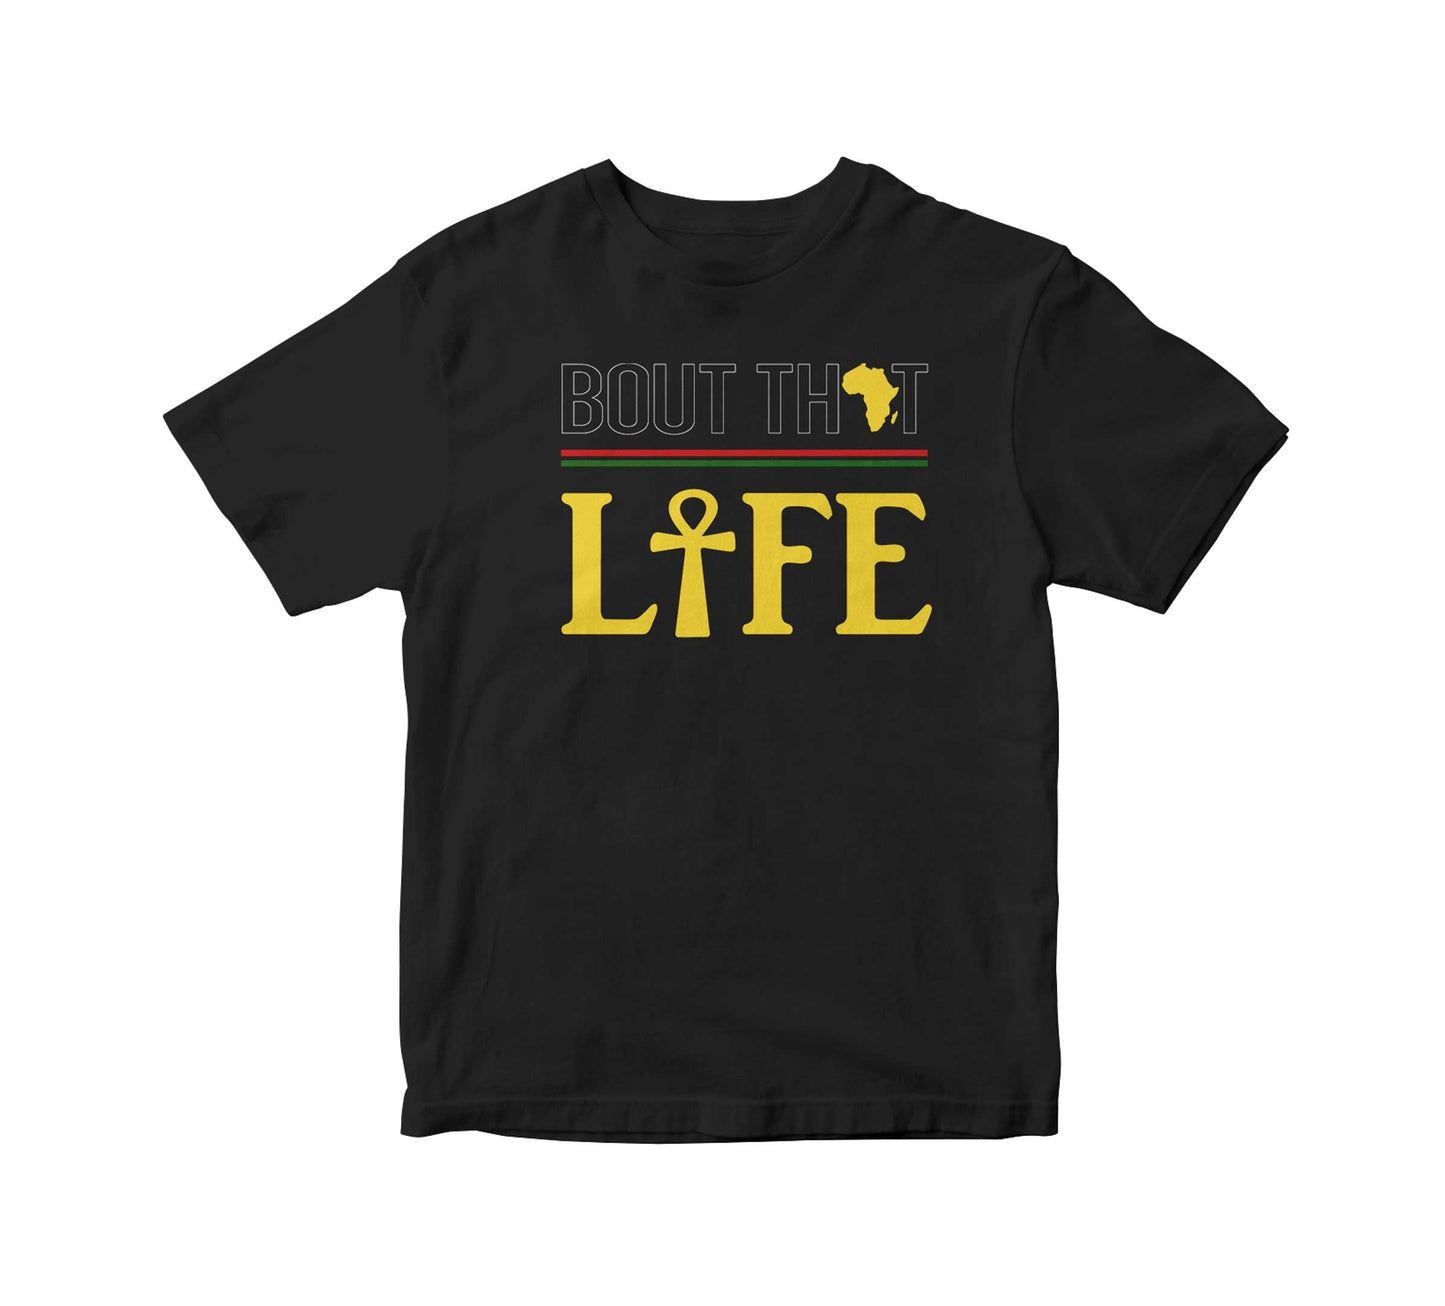 Bout That Life! Kids Unisex T-Shirt